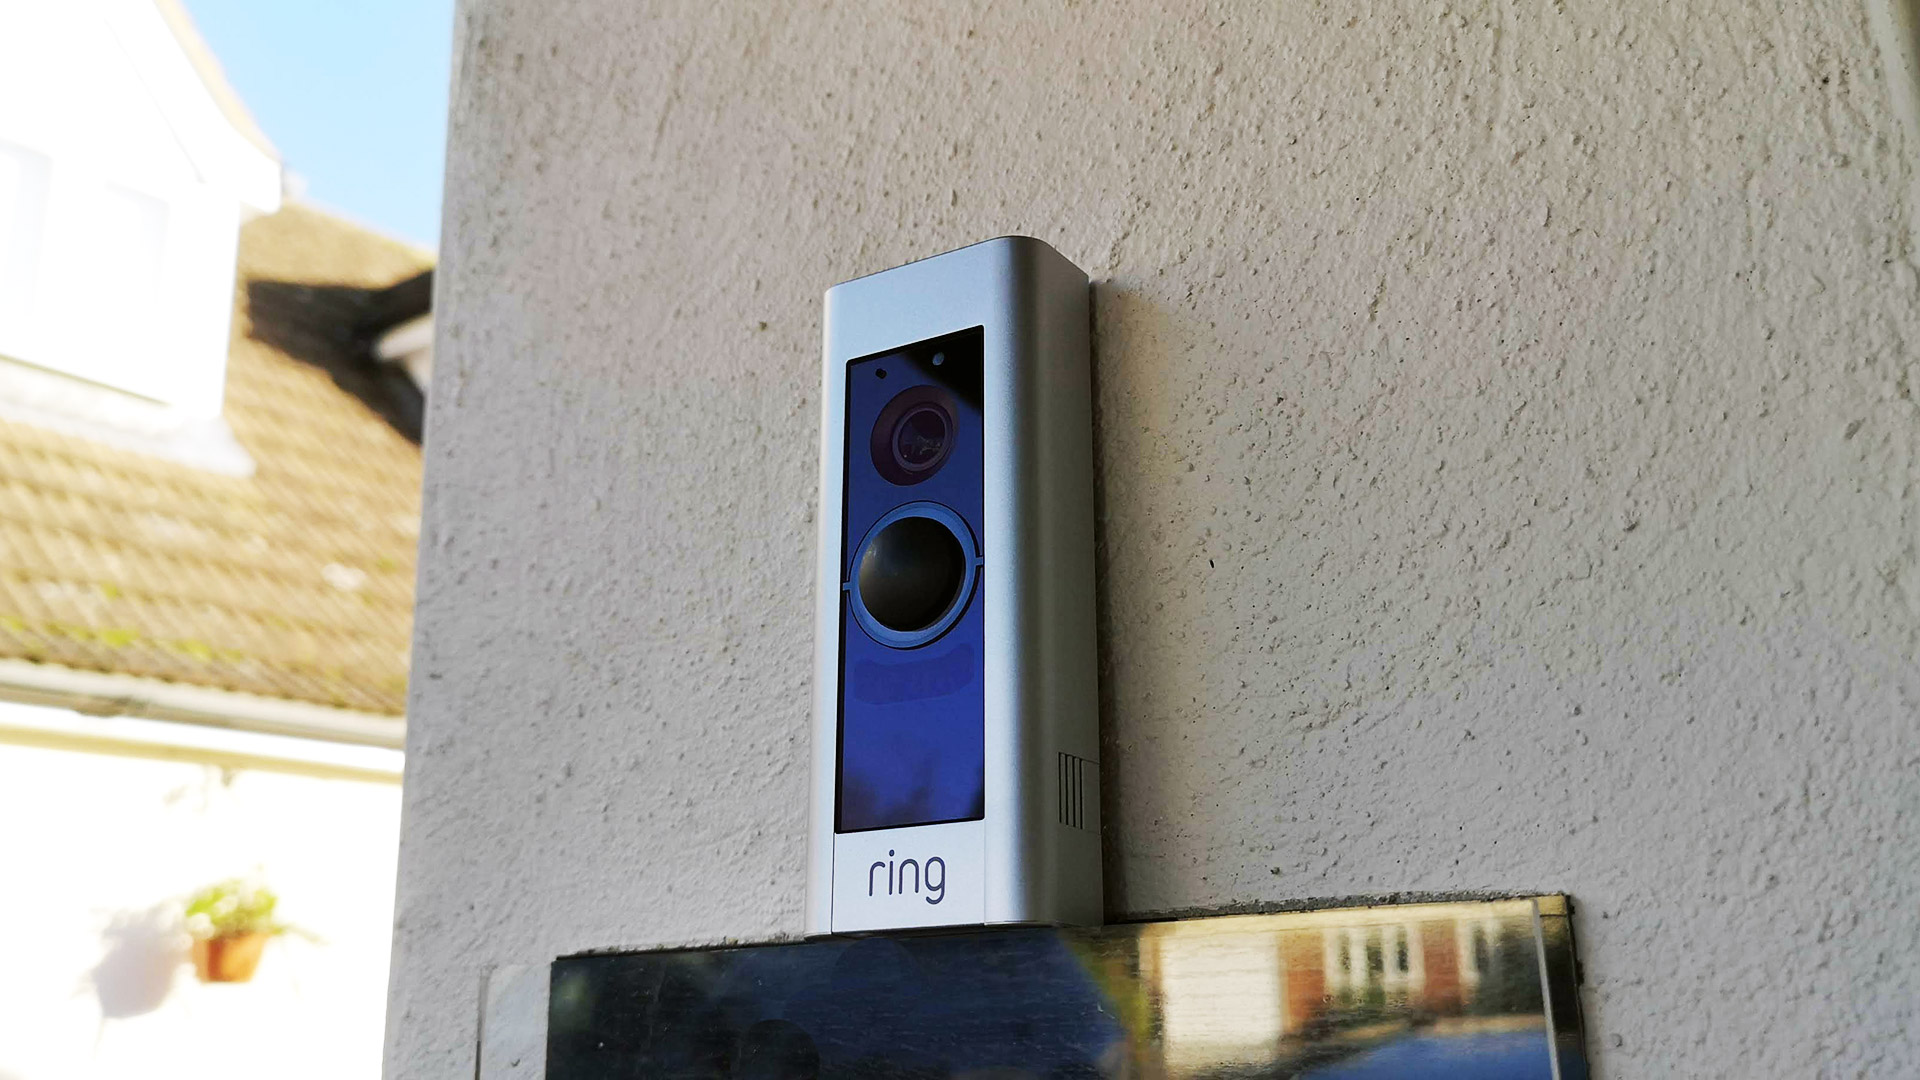 ring doorbell 2 audio feedback